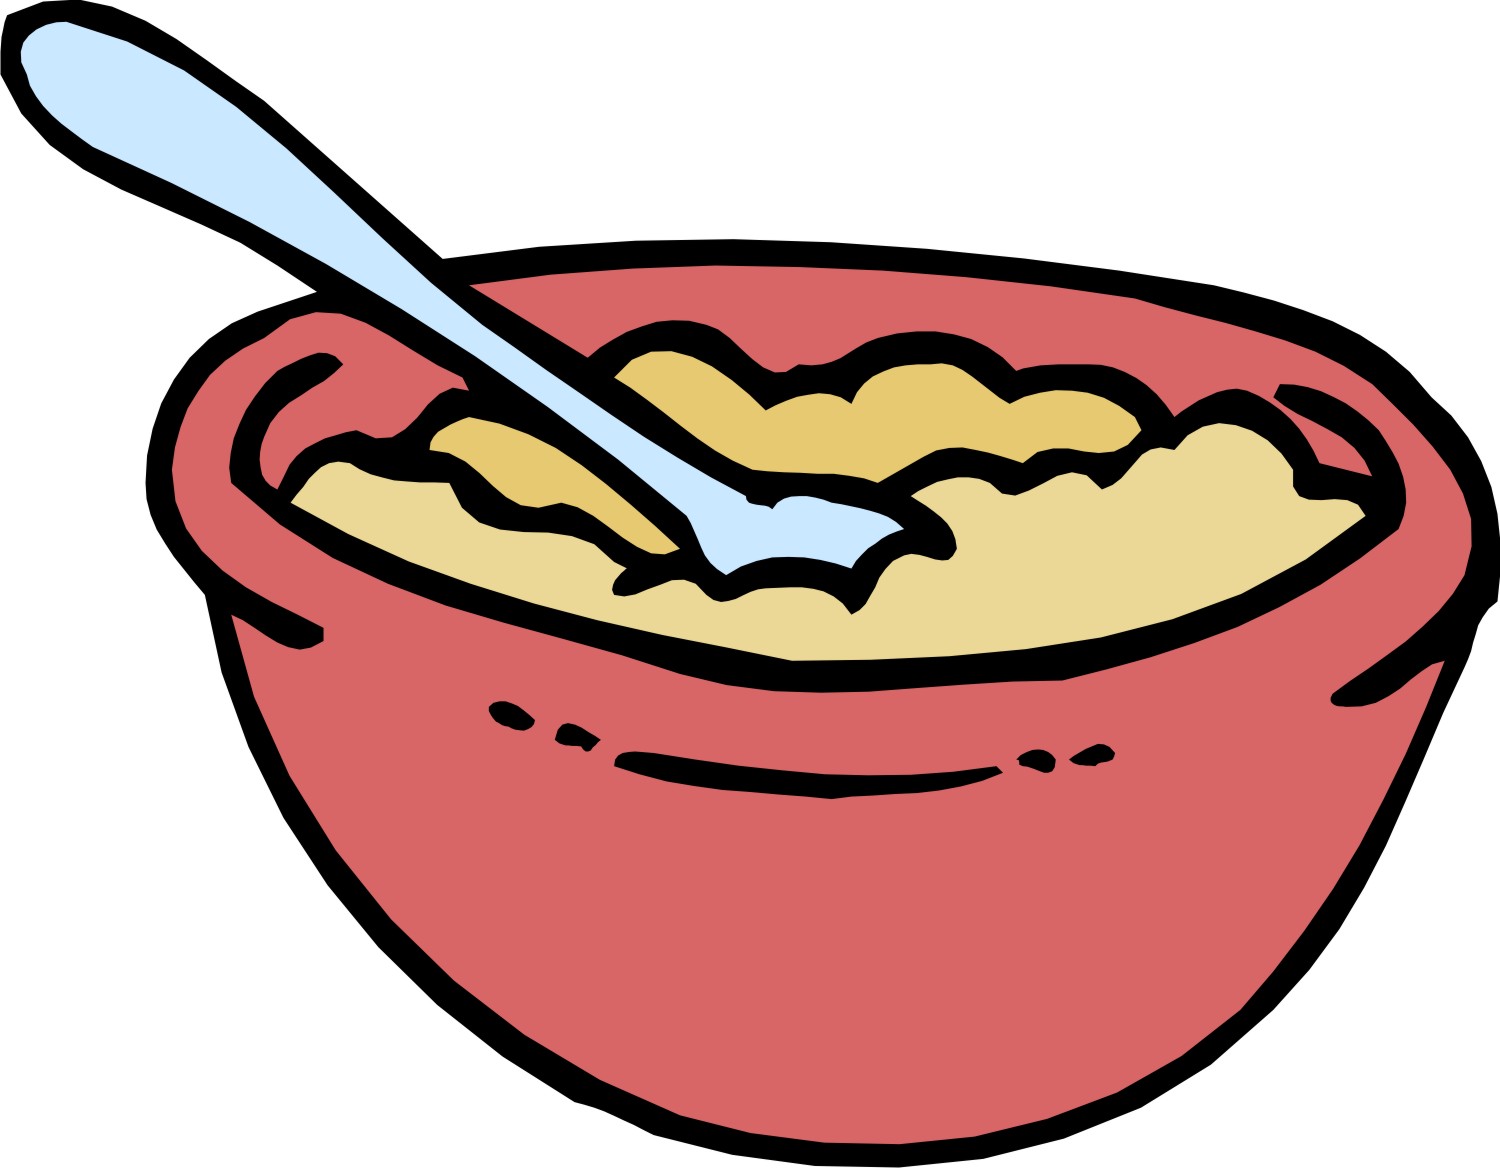 >Bowl of porridge